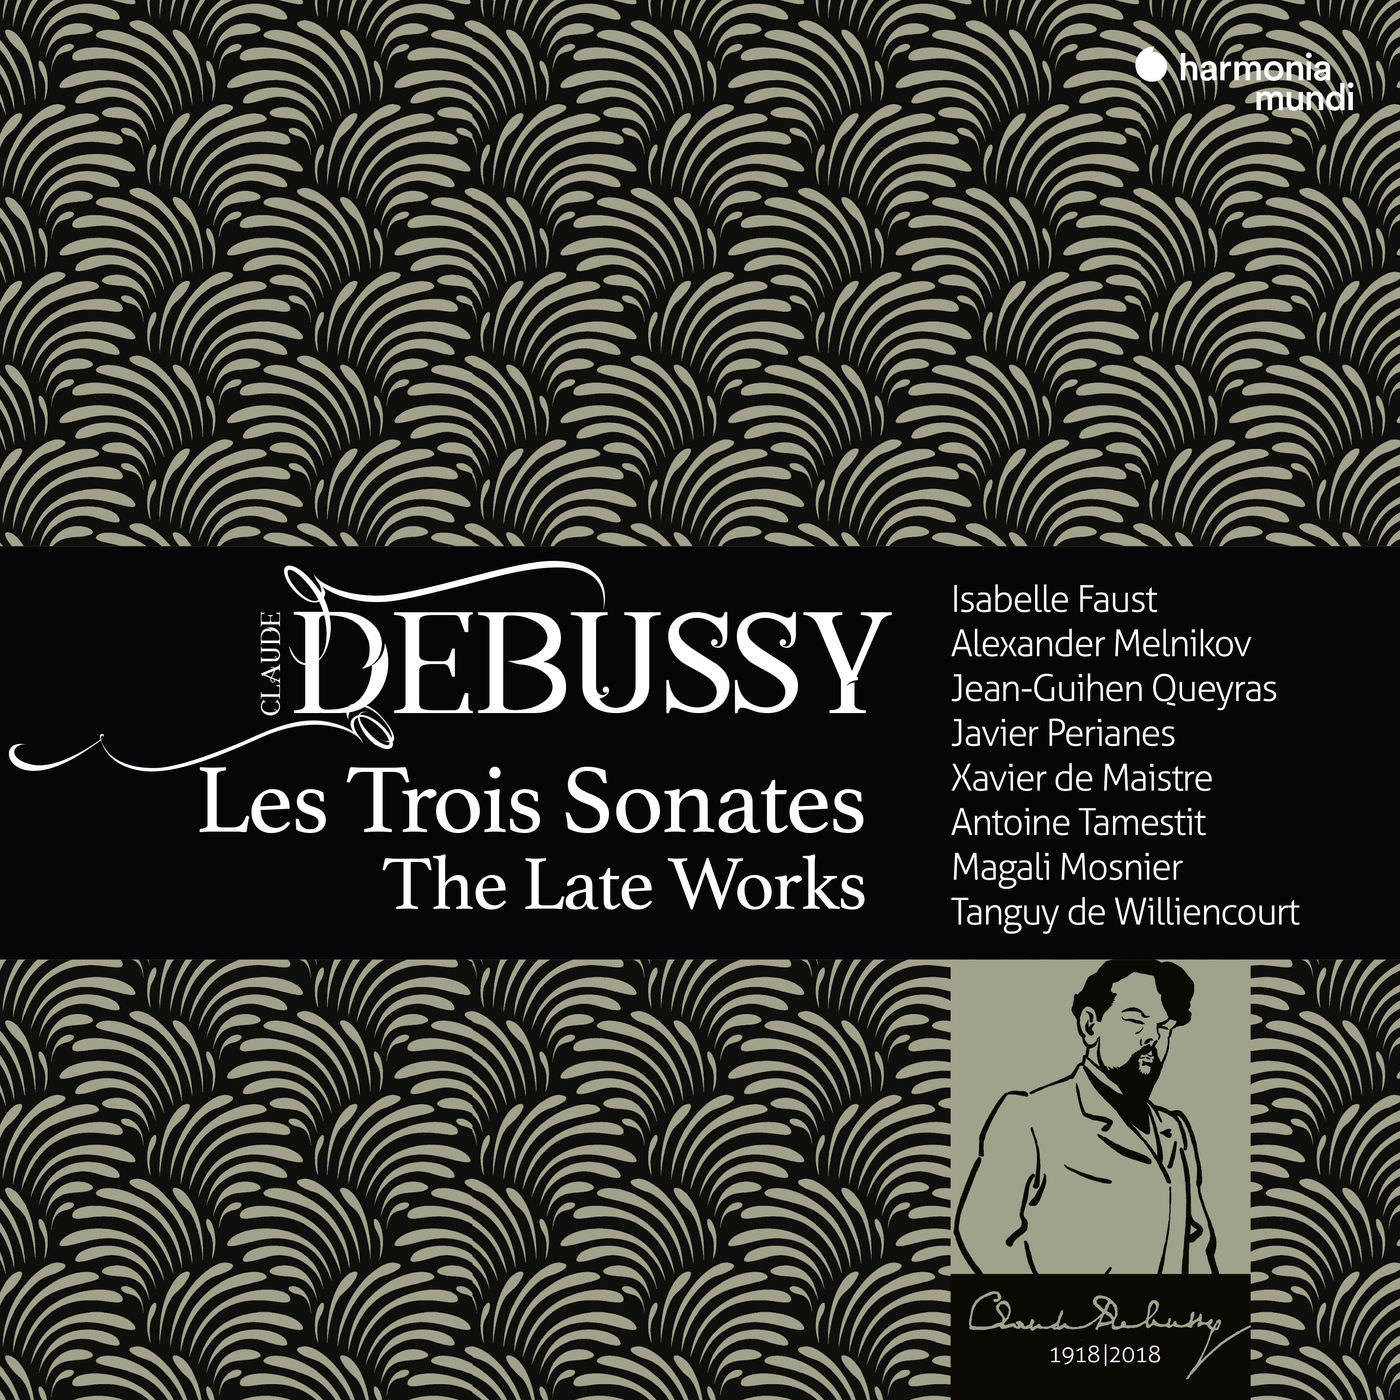 VA - Debussy: Les Trois Sonates, The Late Works (2018) [FLAC 24bit/96kHz]